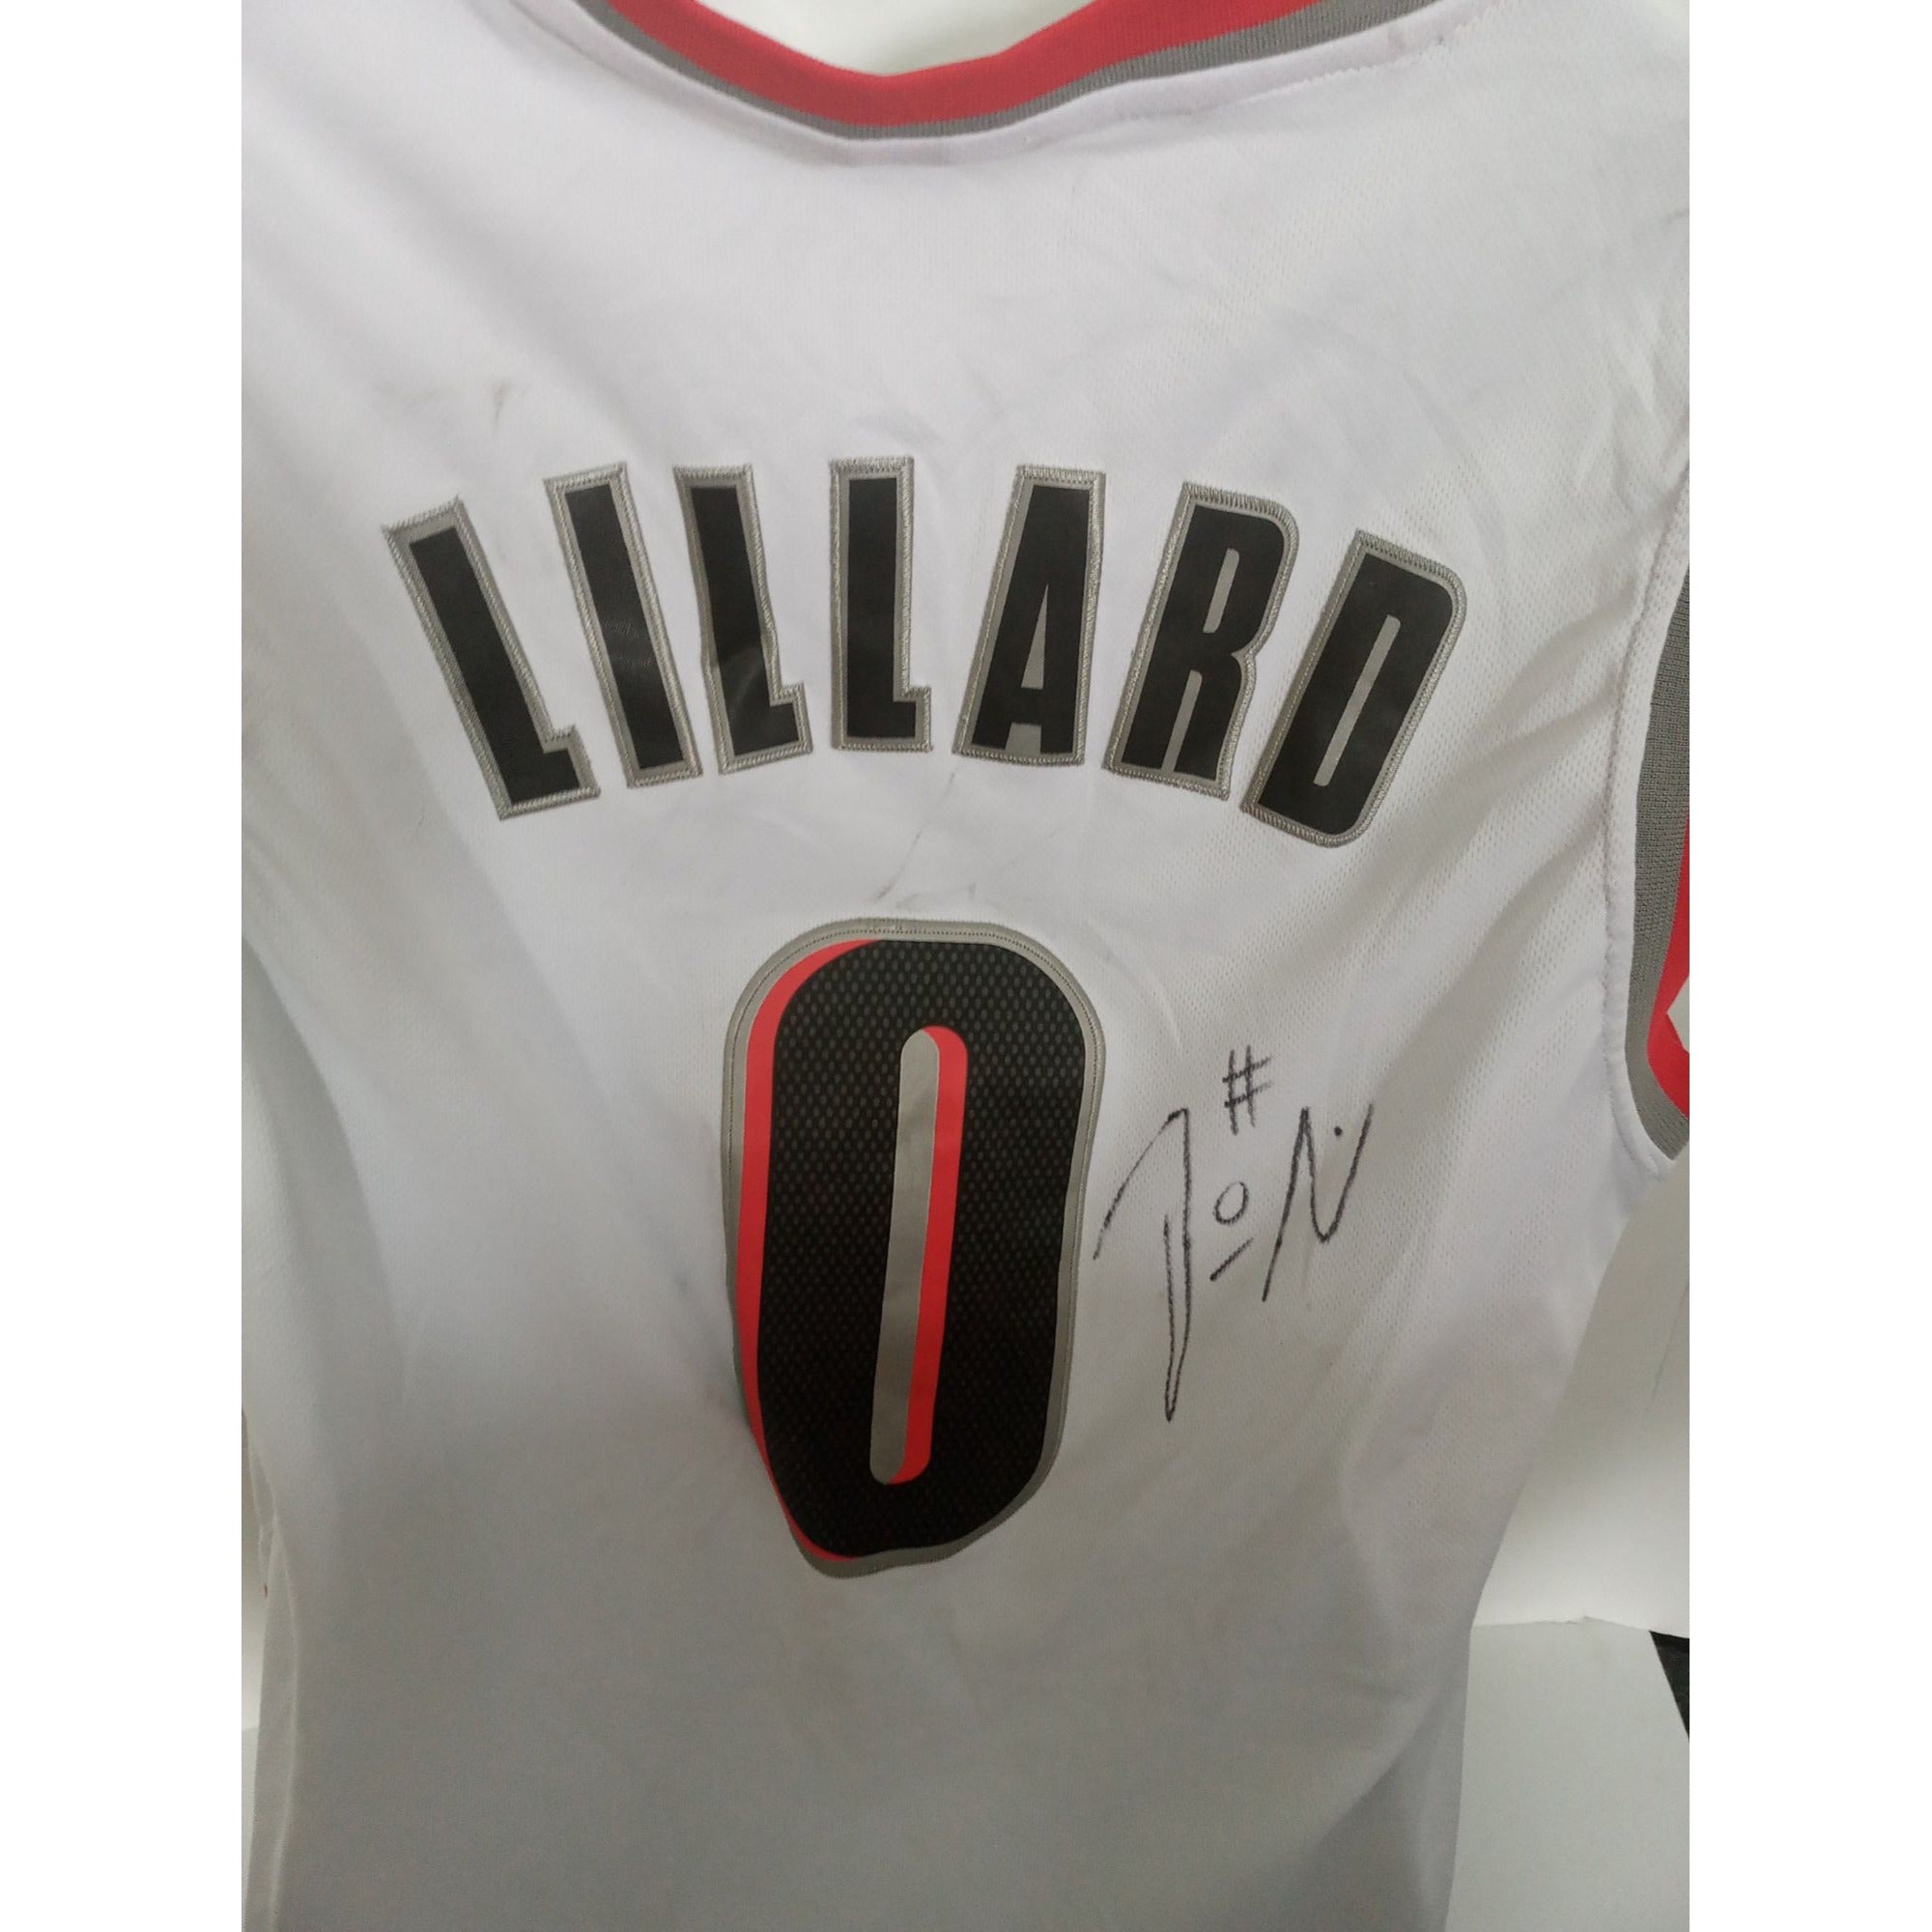 Damian Lillard Portland Trail Blazers jersey signed with proof